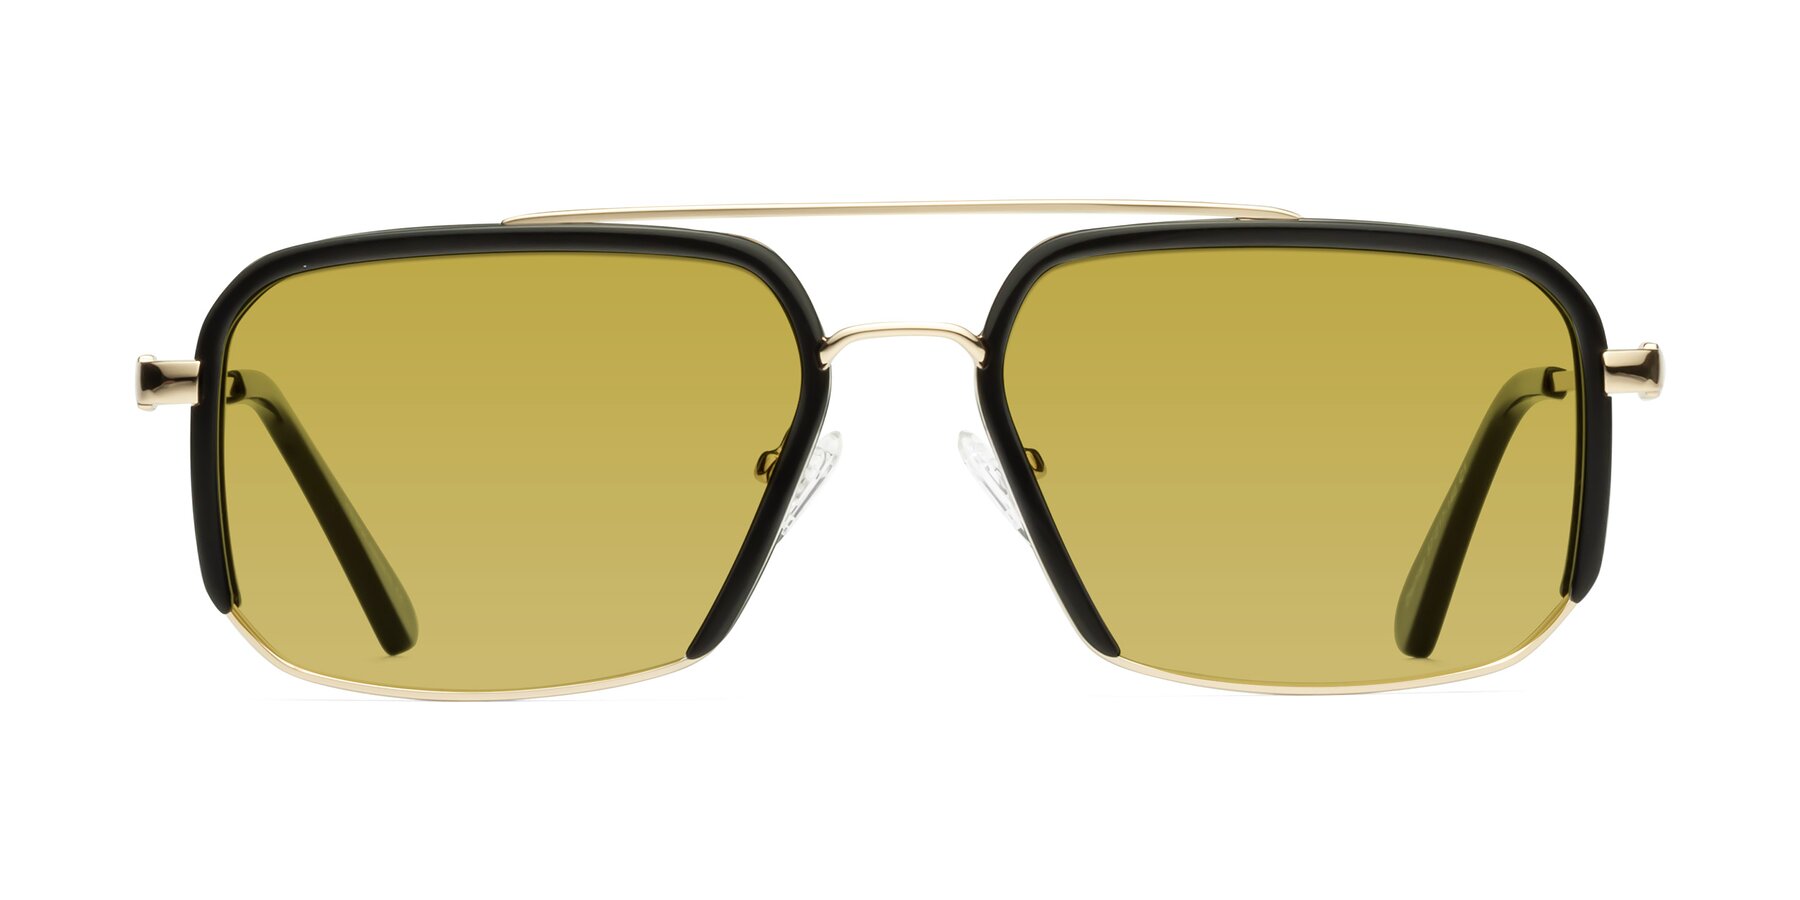 Dechter - Black / Gold Sunglasses